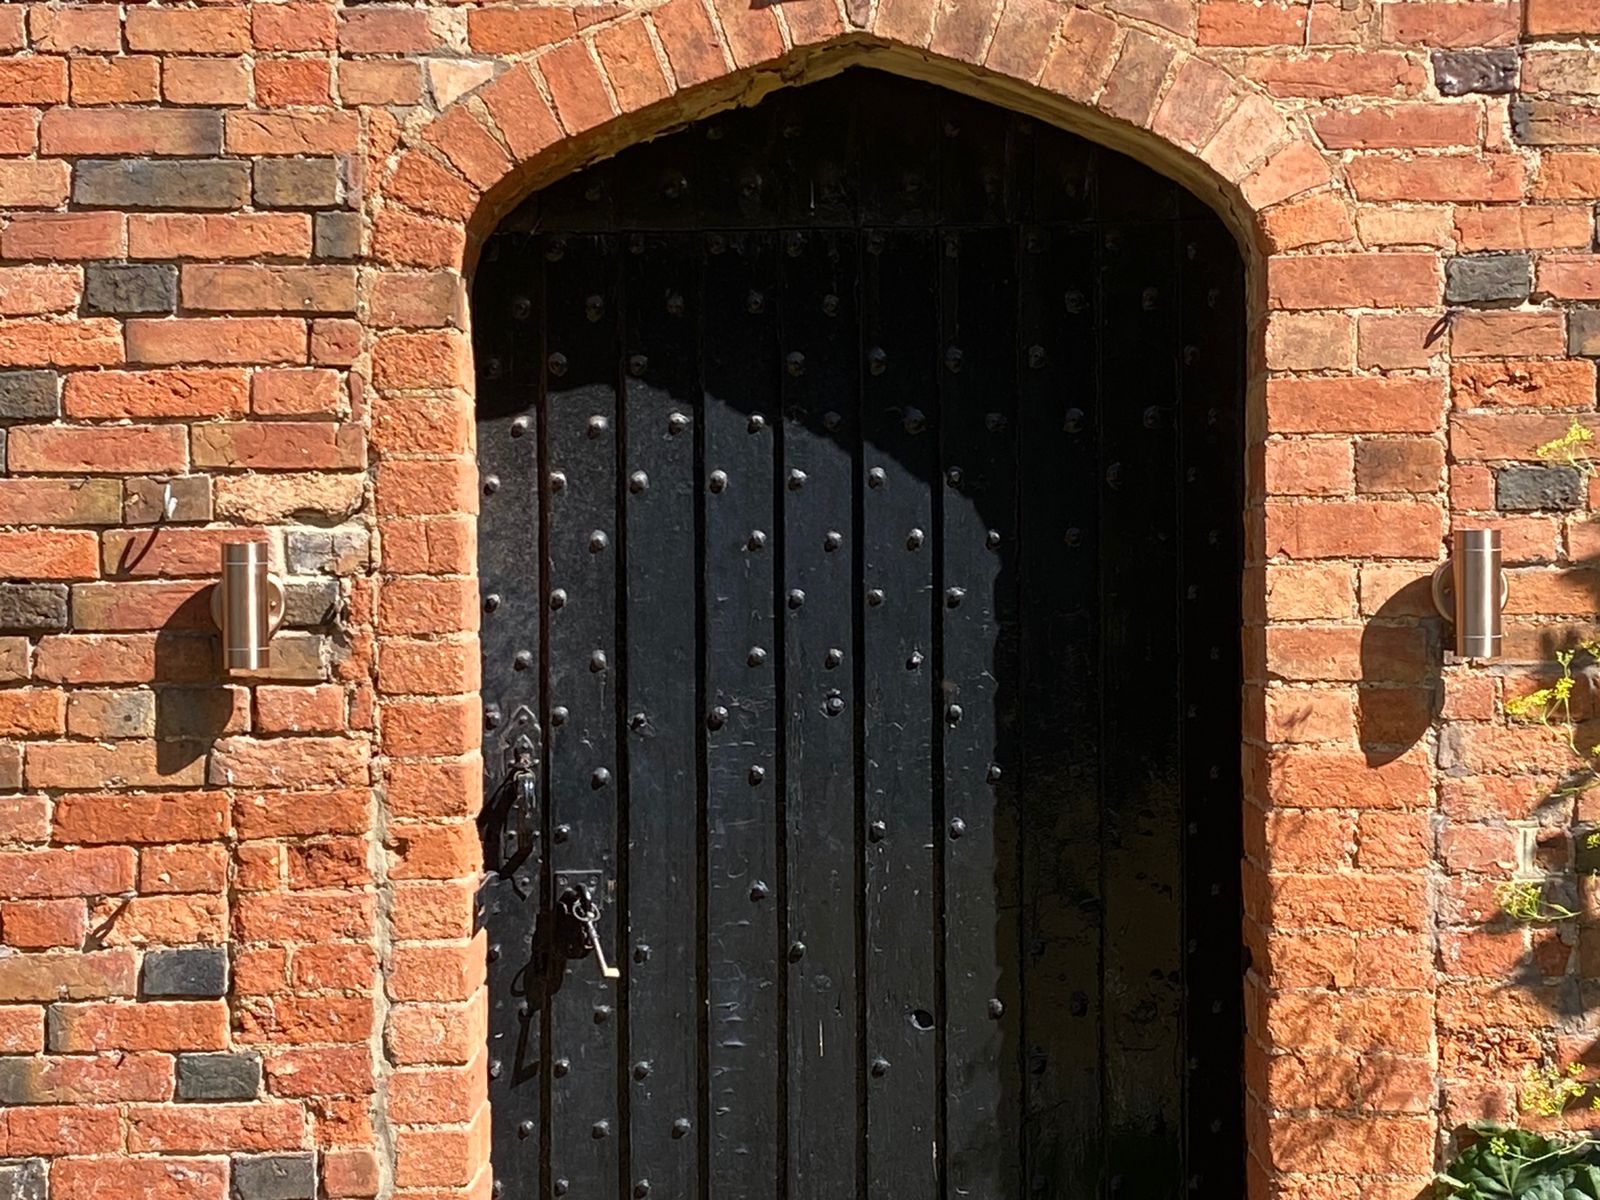 A closeup of the door